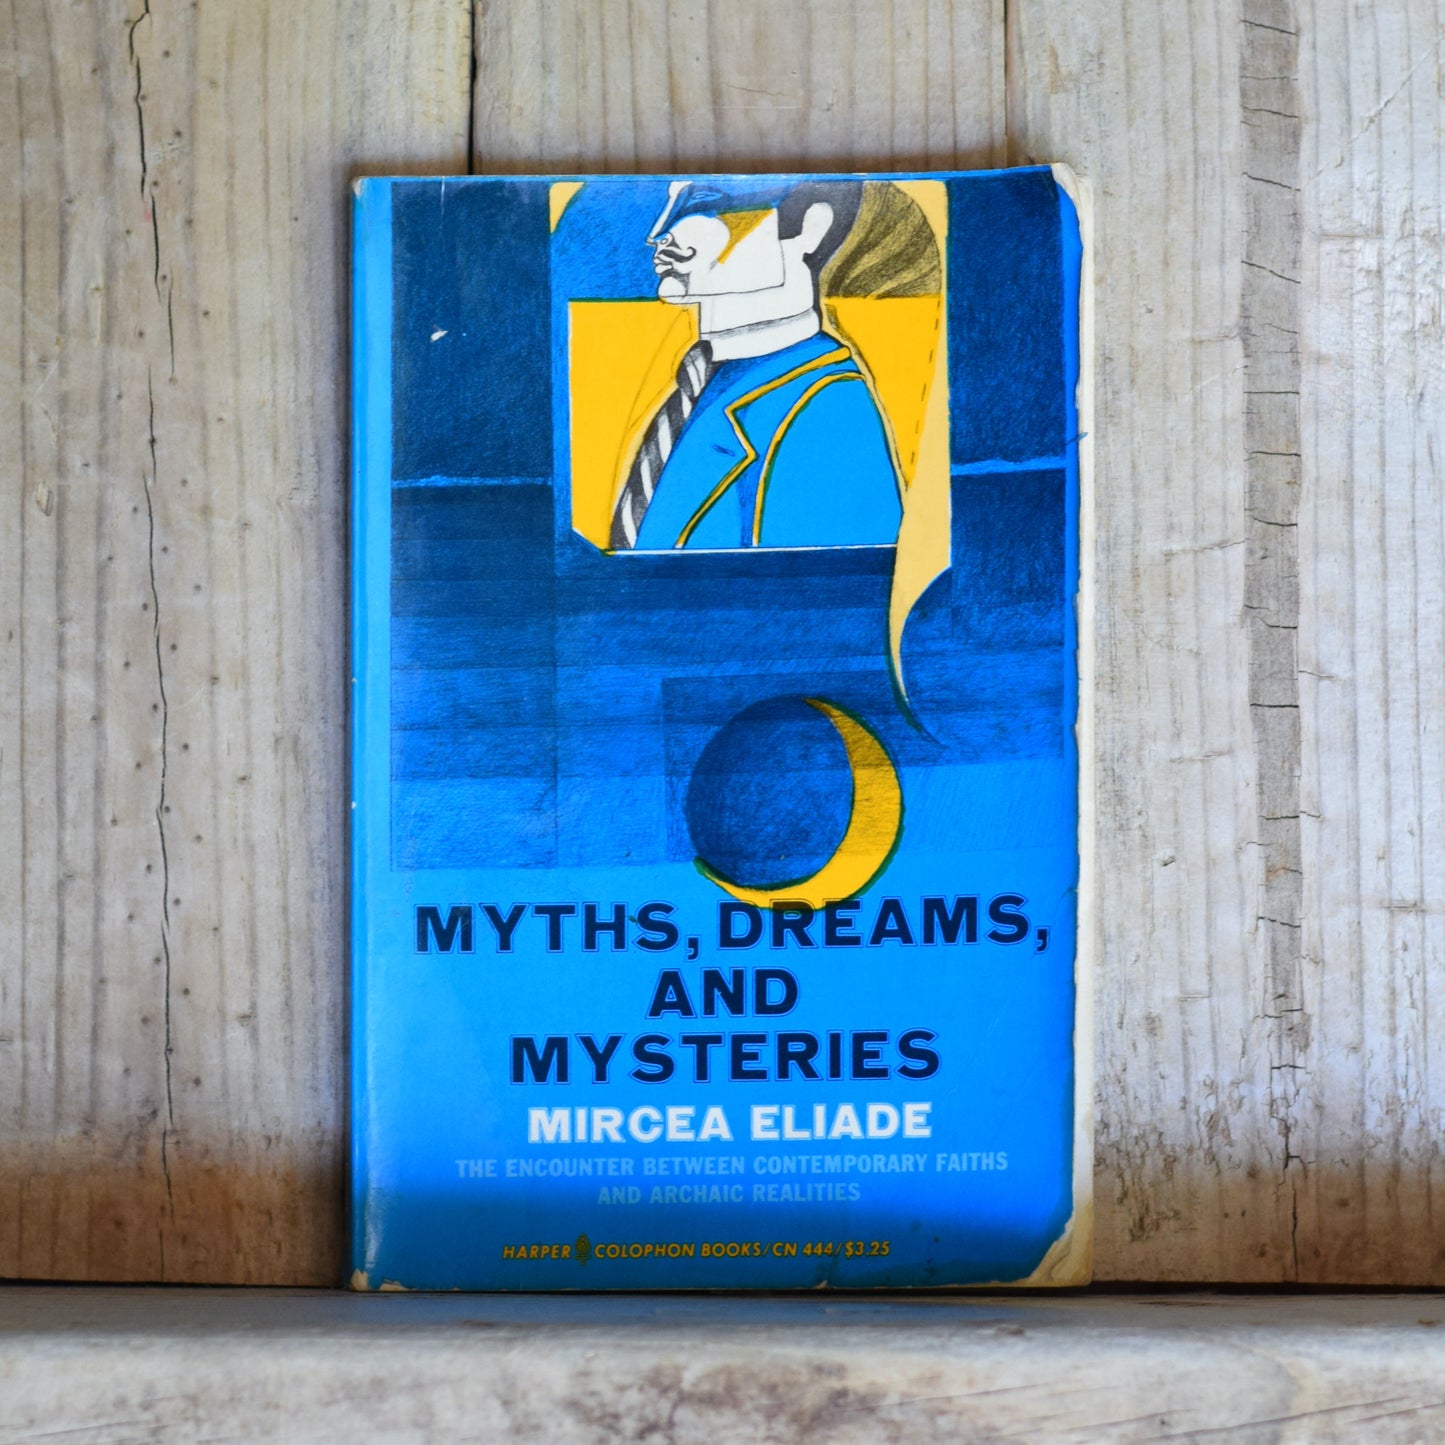 Vintage Philosophy Paperback: Mircea Eliade - Myths, Dreams, and Mysteries